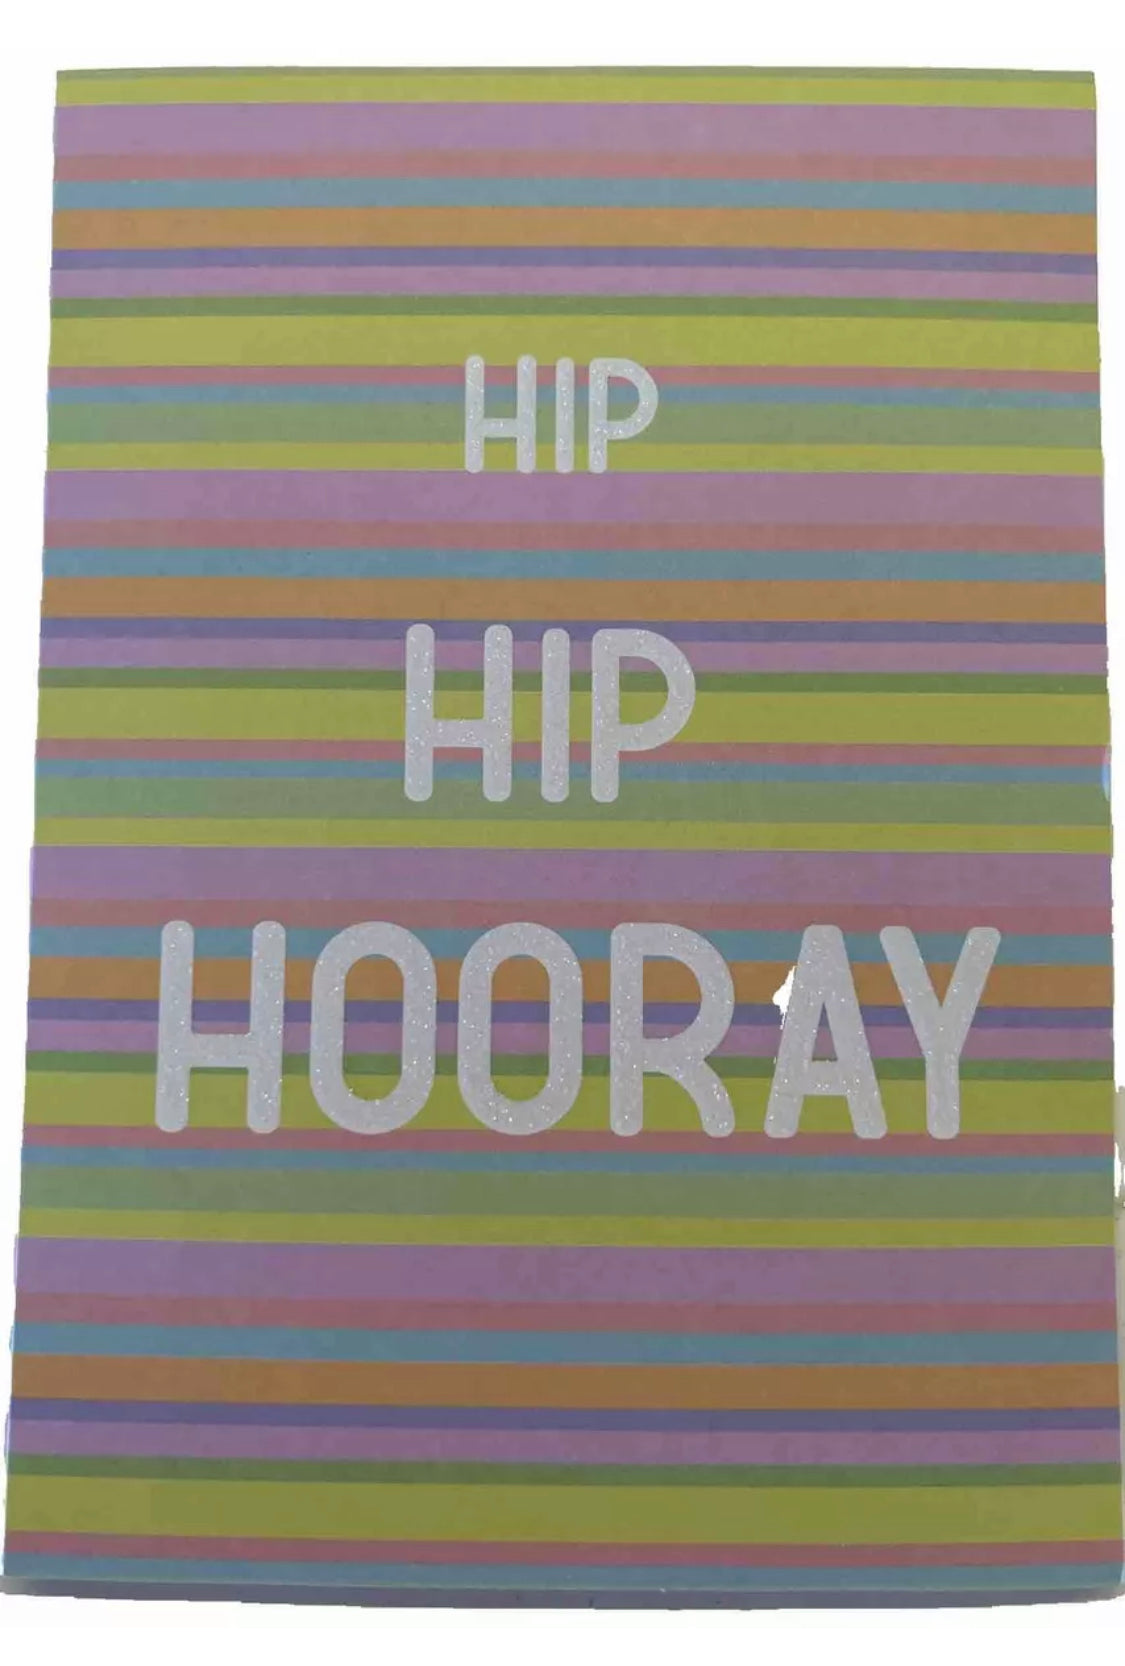 Hip hip hooray - blank greeting card